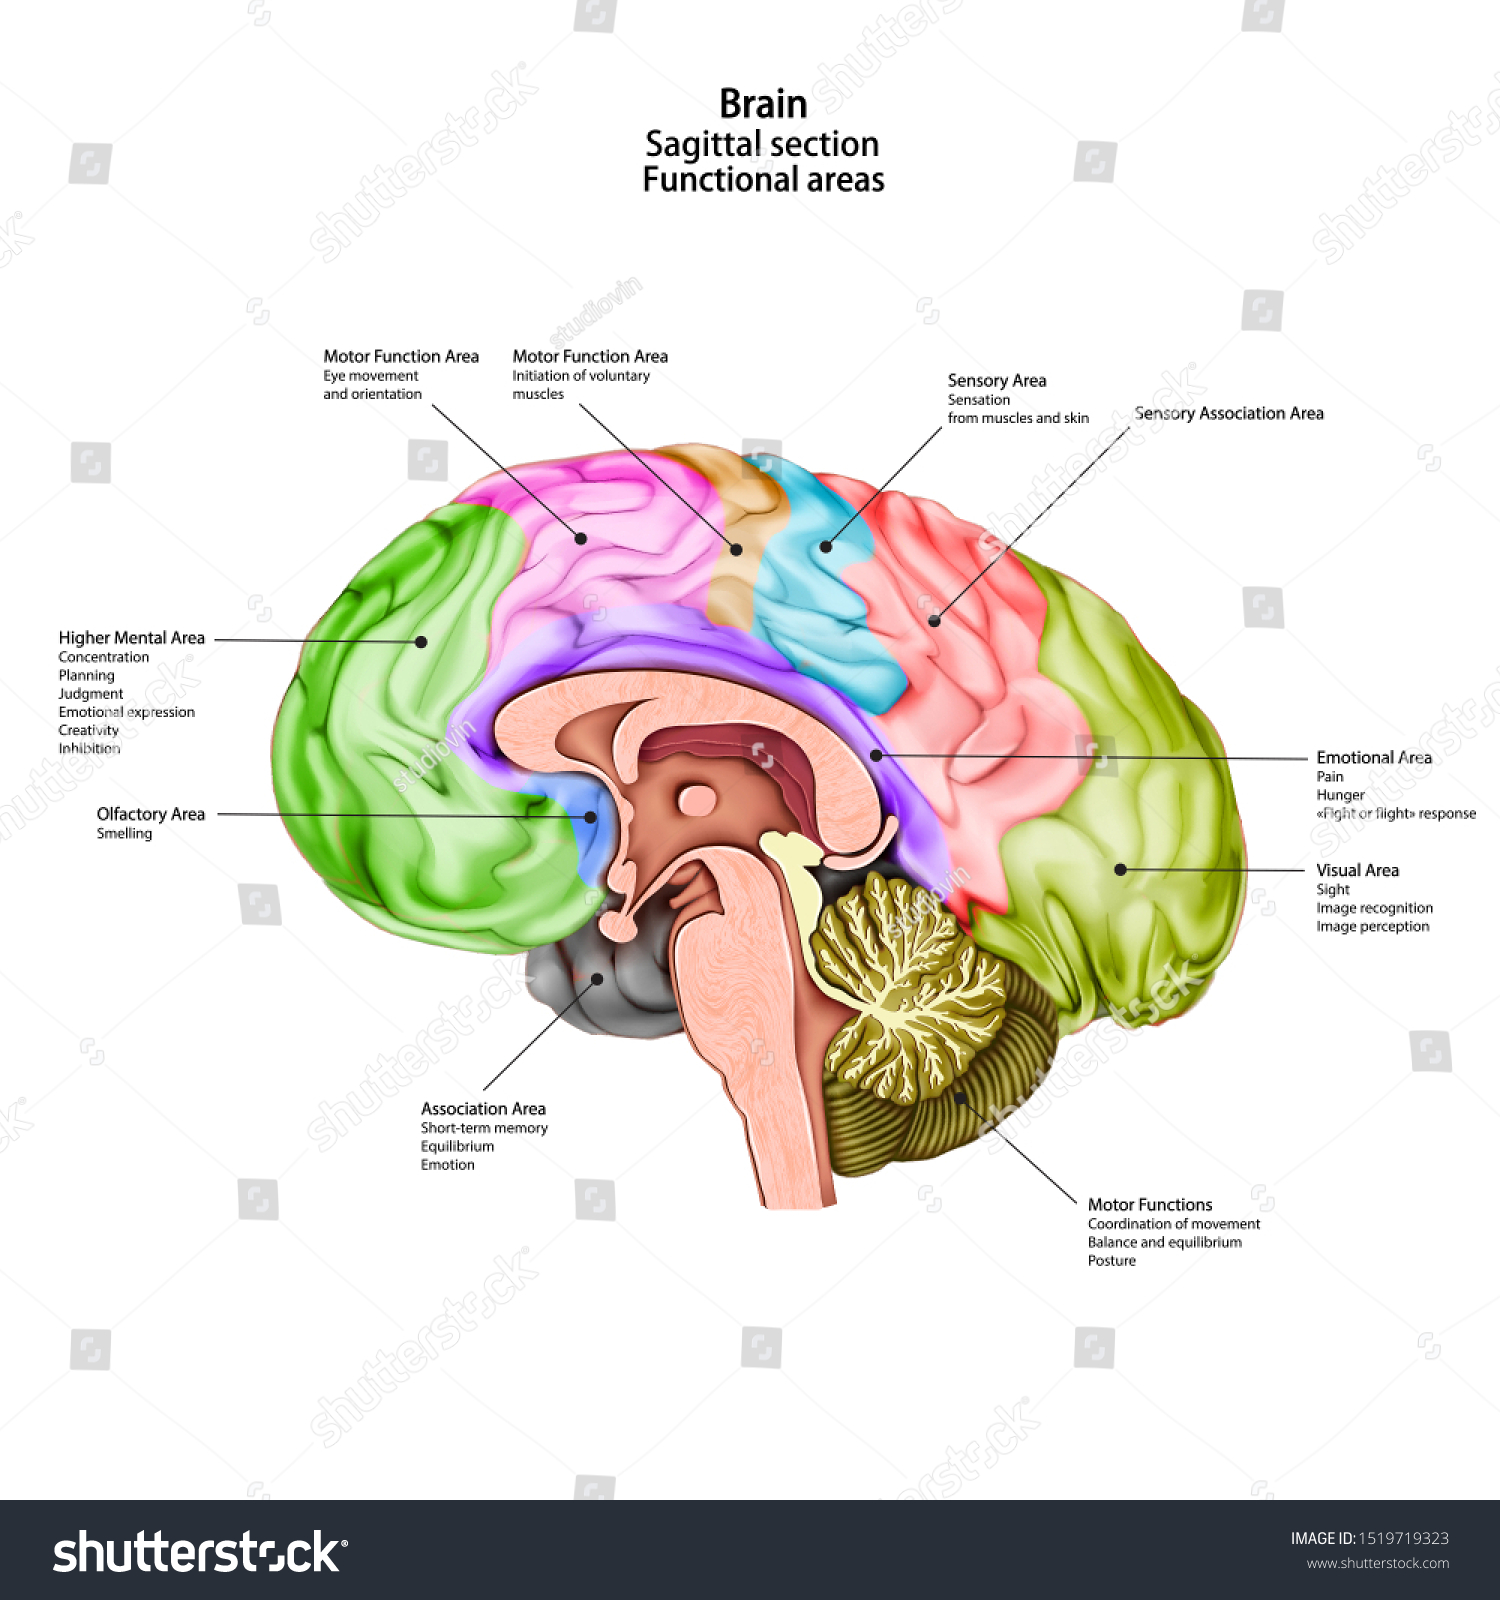 Sagittal Cross Section Brain 6282